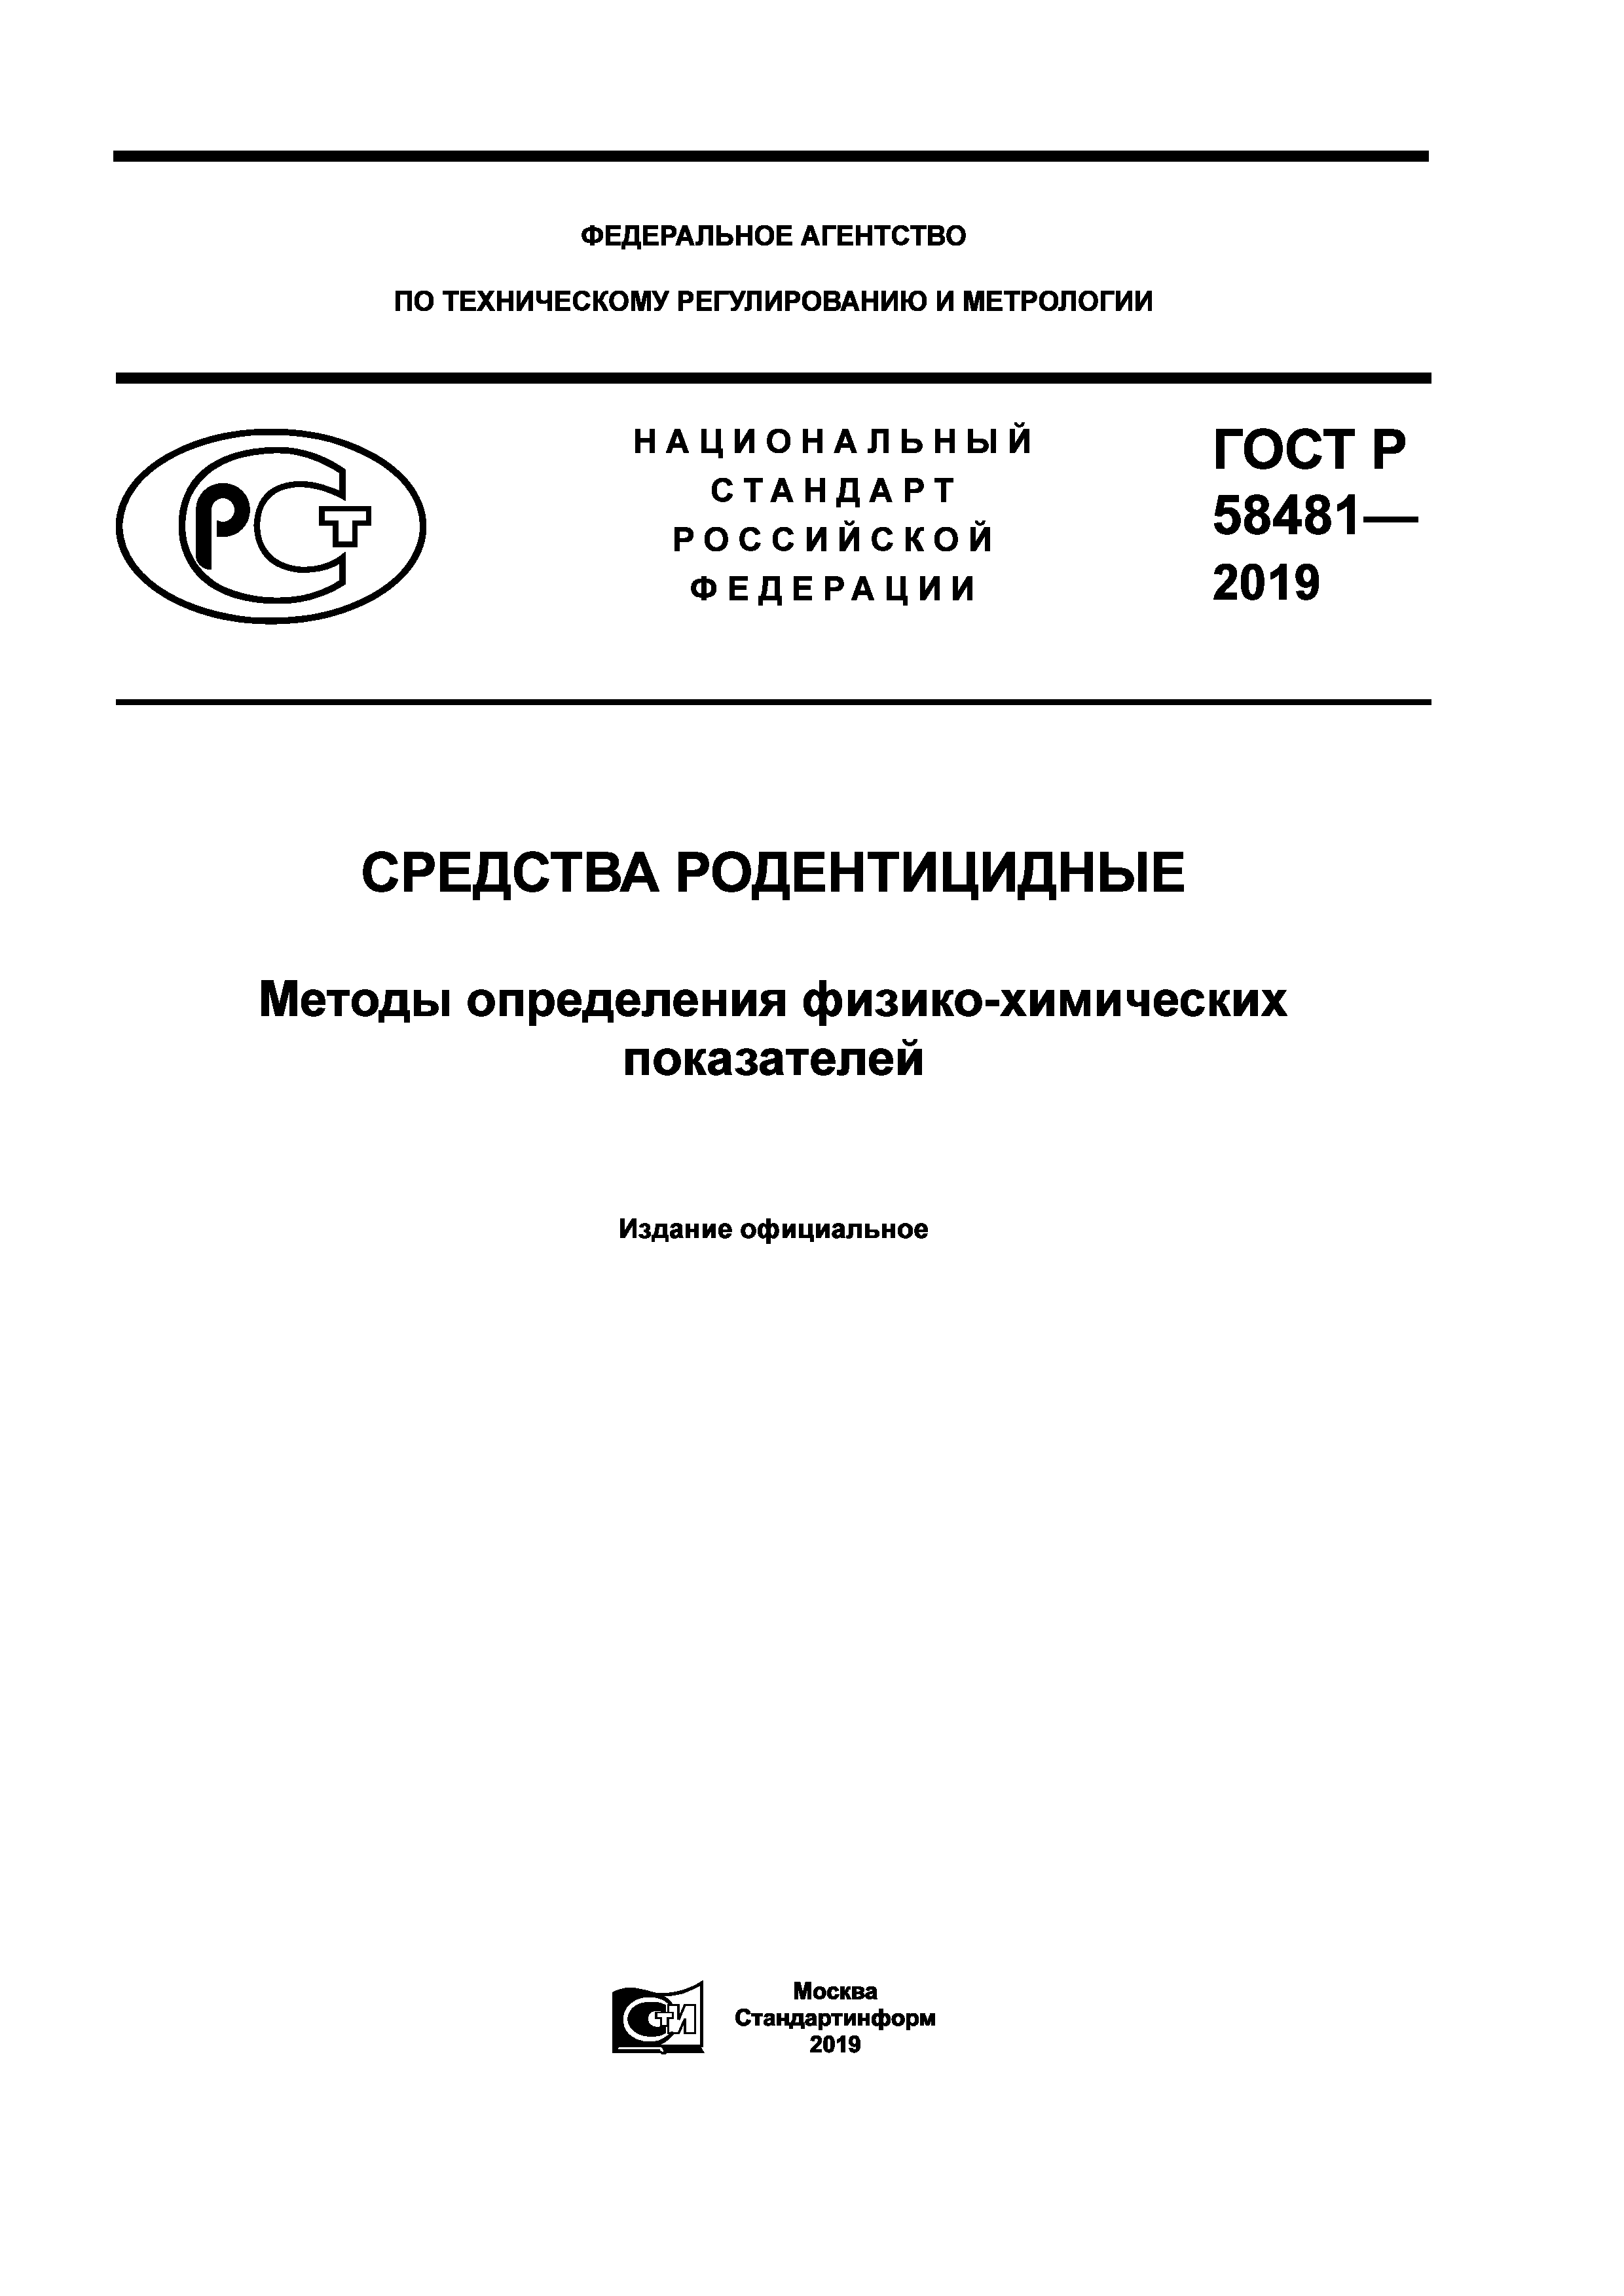 ГОСТ Р 58481-2019